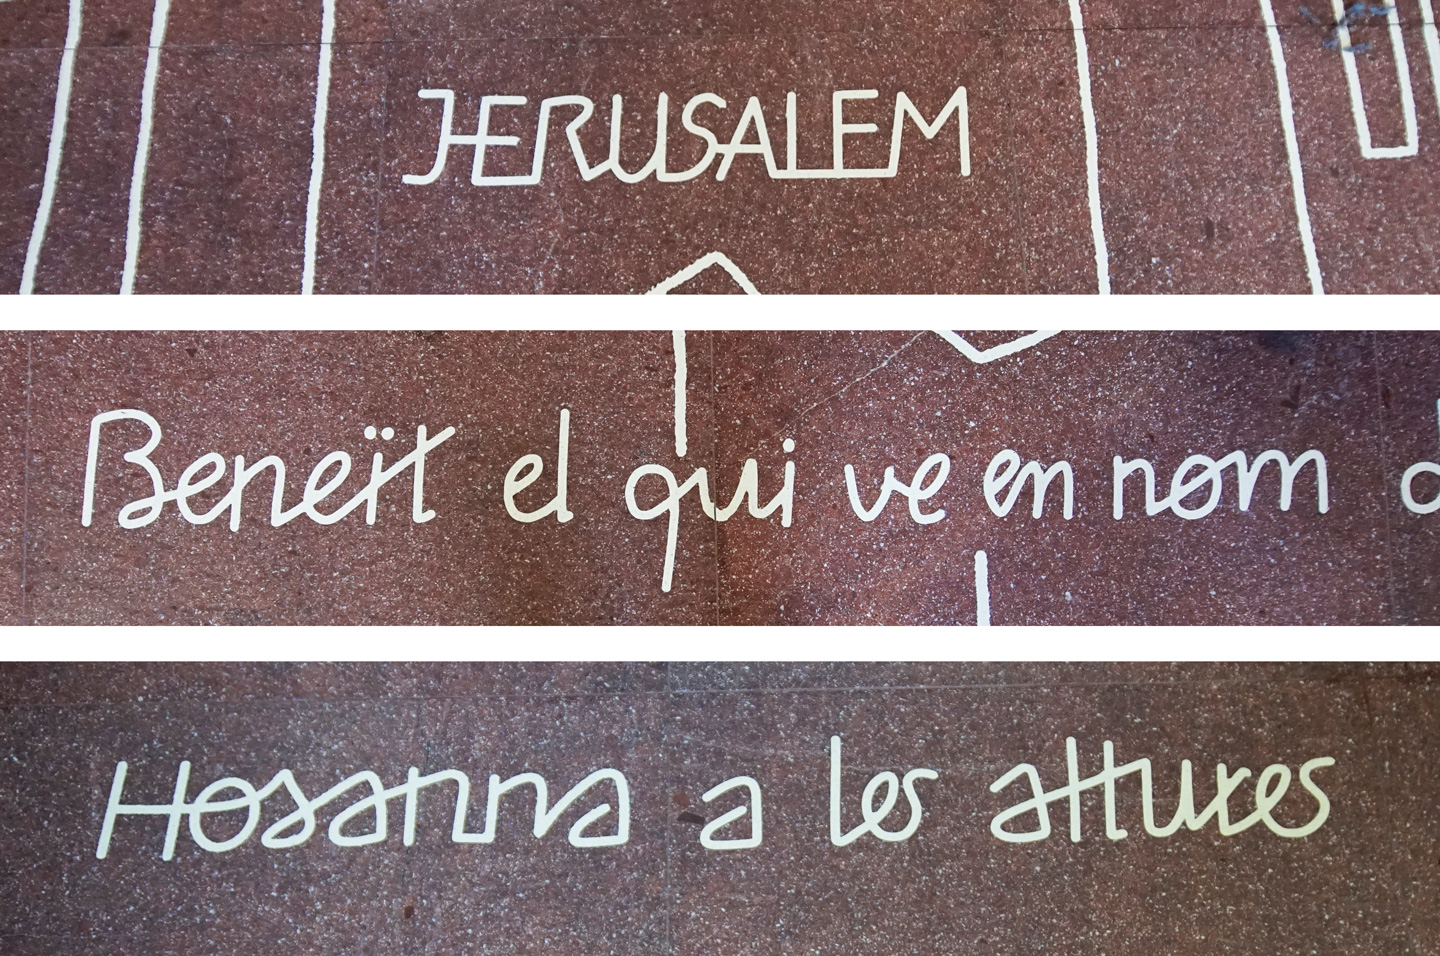 Another angular script on the floor of Sagrada Famíla